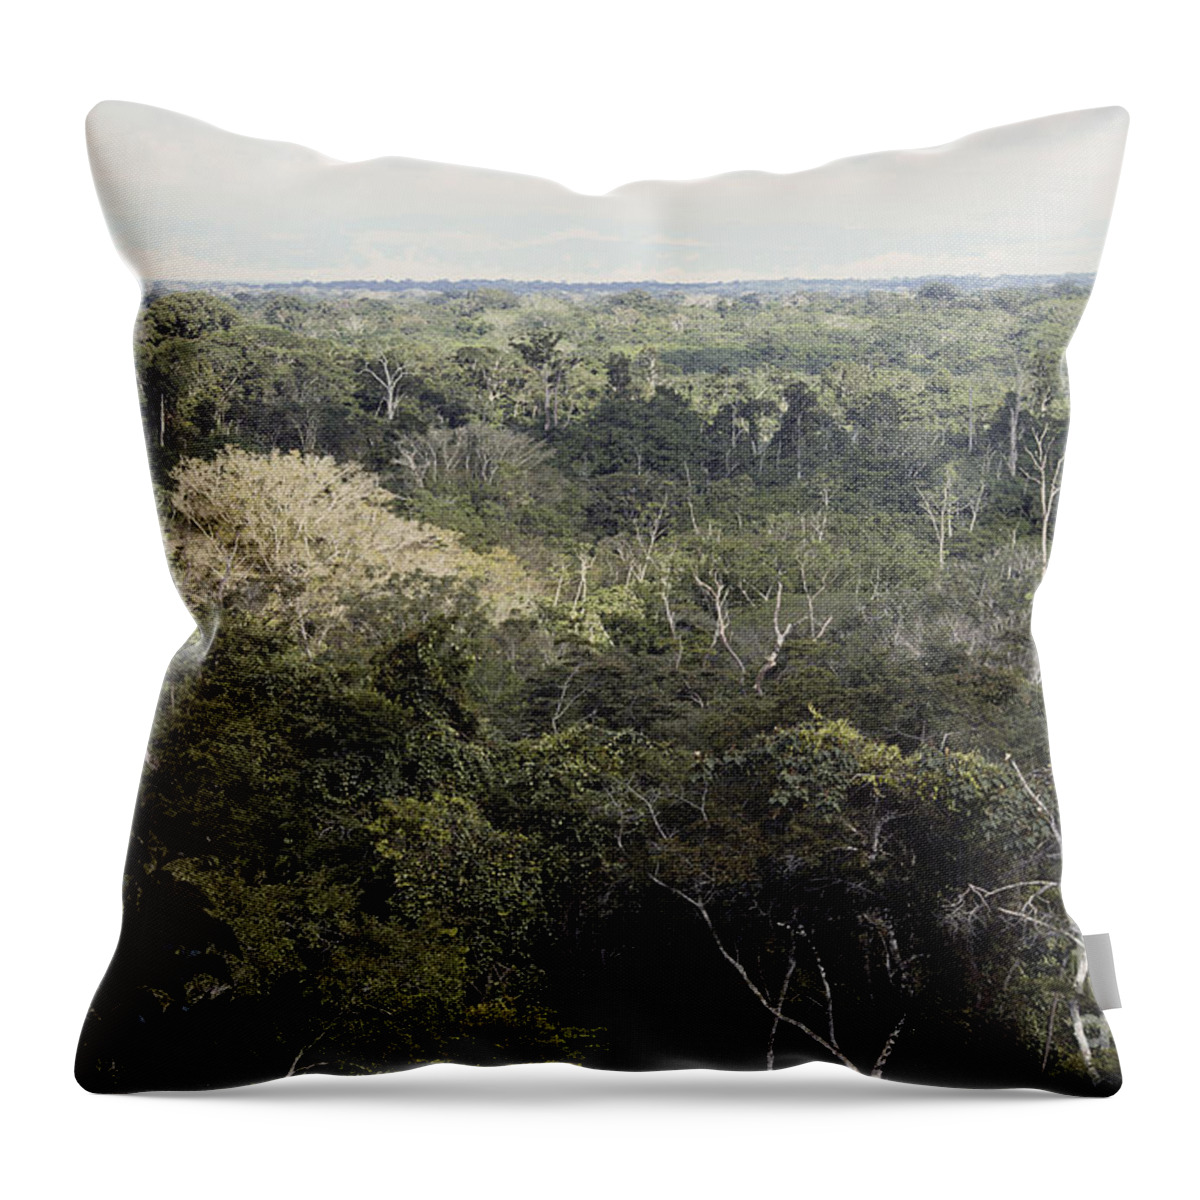 Rainforest Canopy Throw Pillow featuring the photograph Peruvian Rainforest Canopy by Gregory G. Dimijian, M.D.